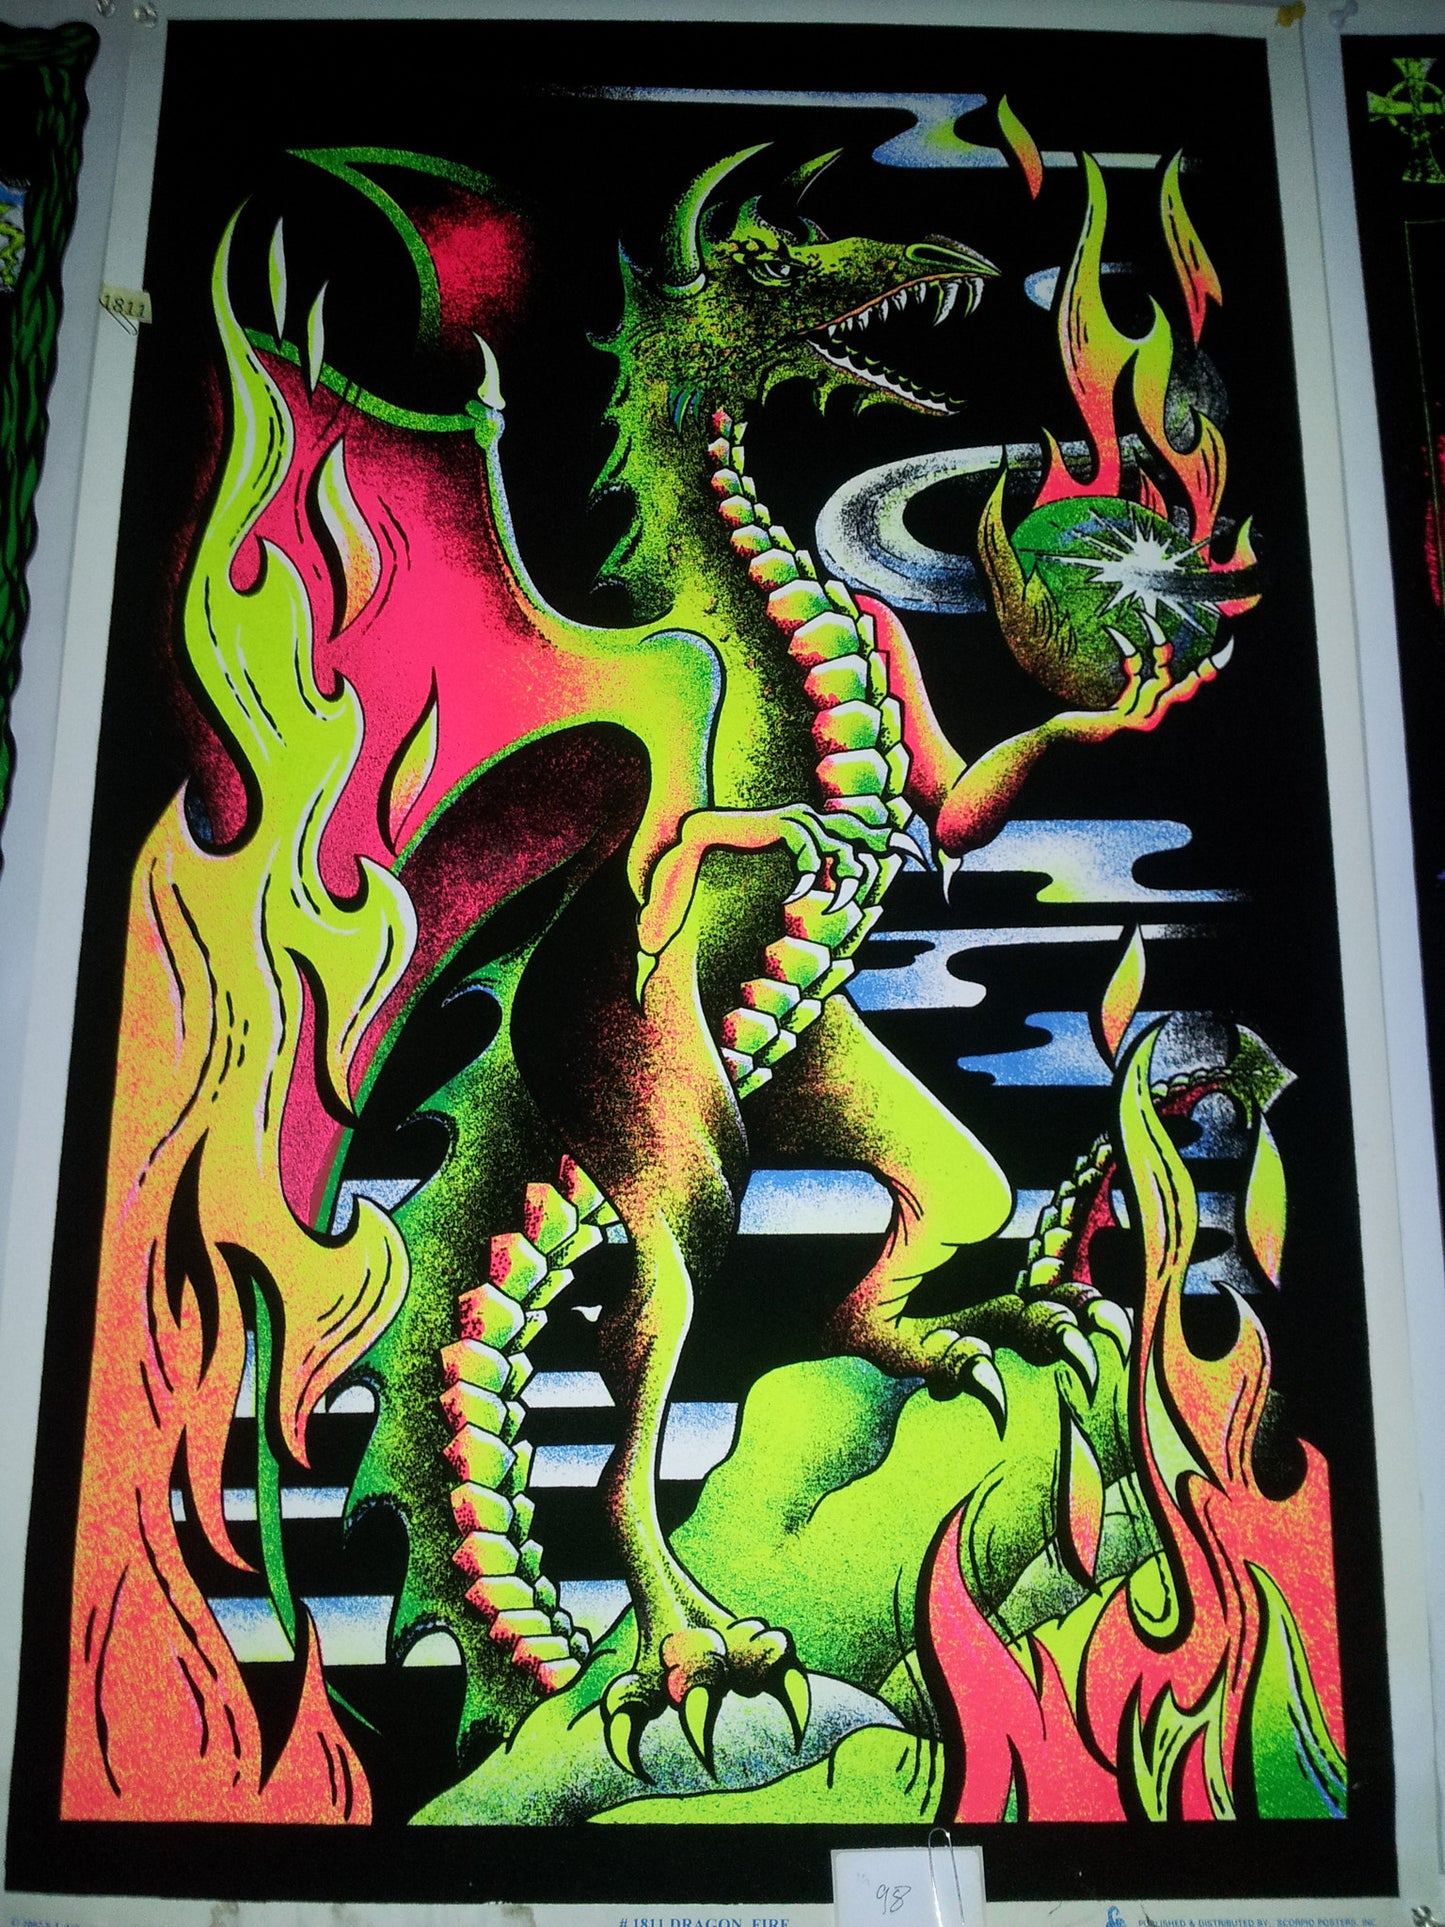 Felt Black Light Poster - 2002 - Dragon Fire